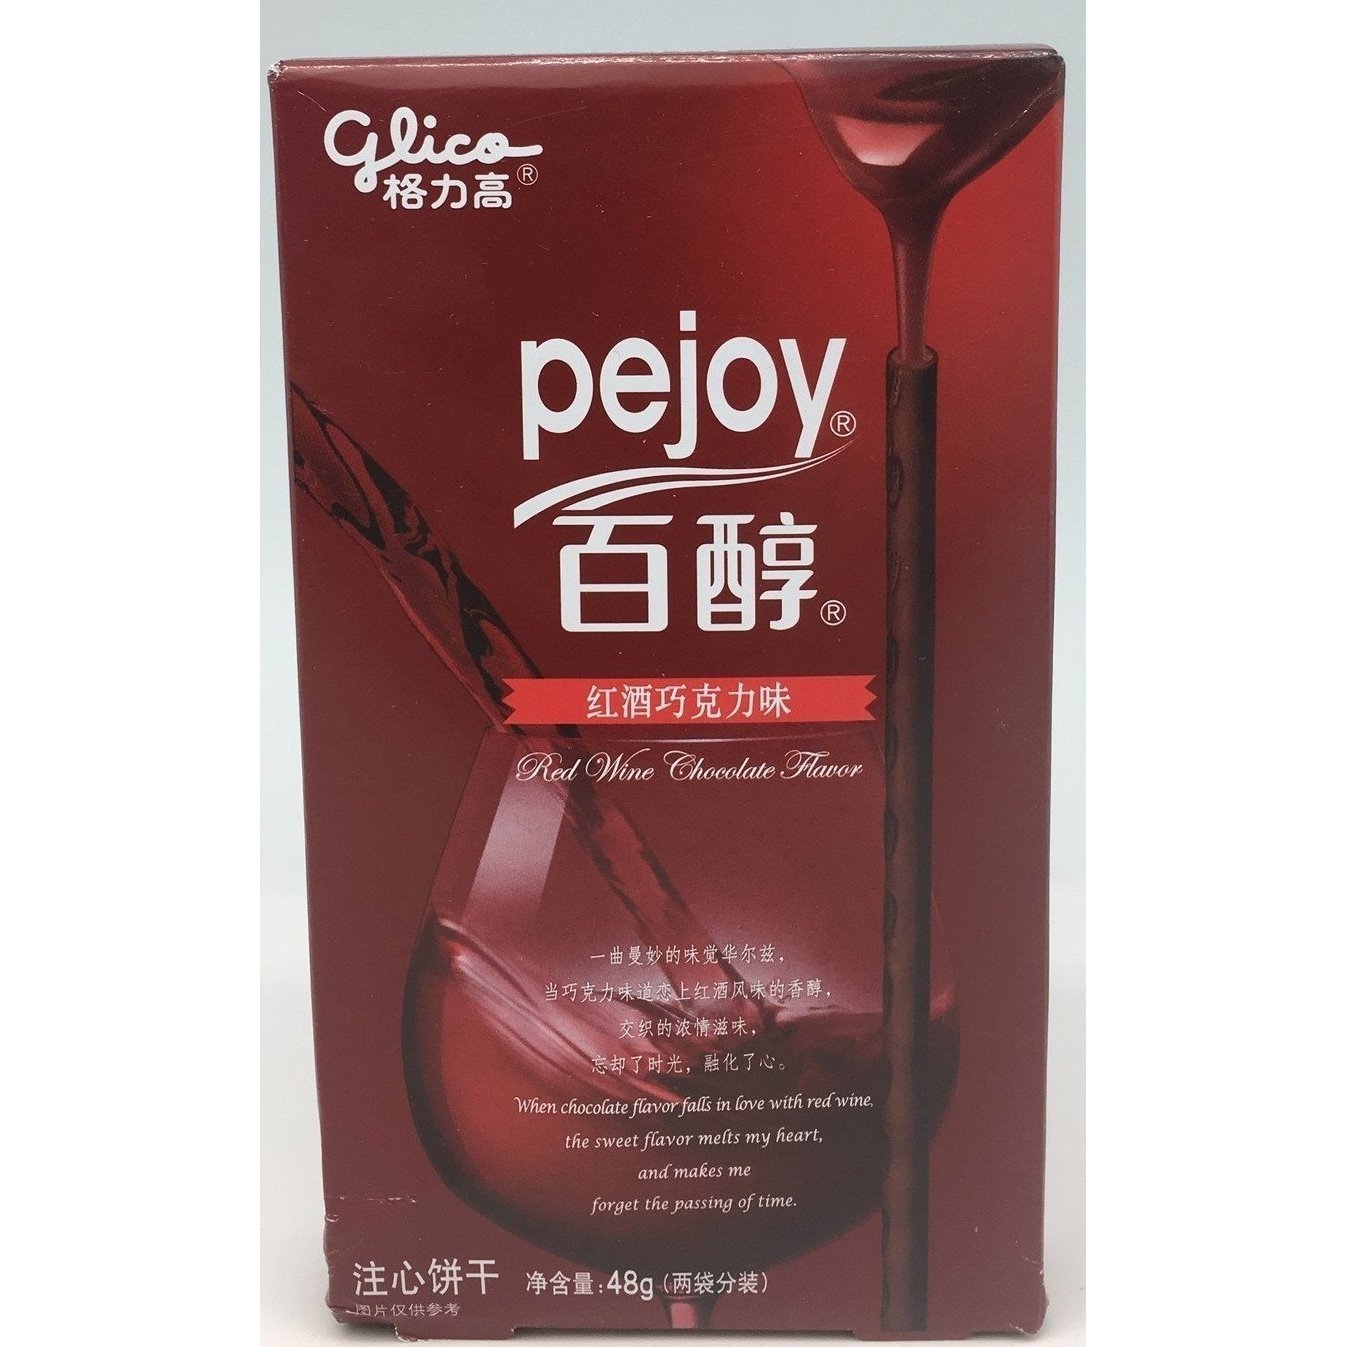 C033R Glica Brand - Pejoy Sticks Red Wine Chocolate Flavour 48g - 36 box / 1CTN - New Eastland Pty Ltd - Asian food wholesalers